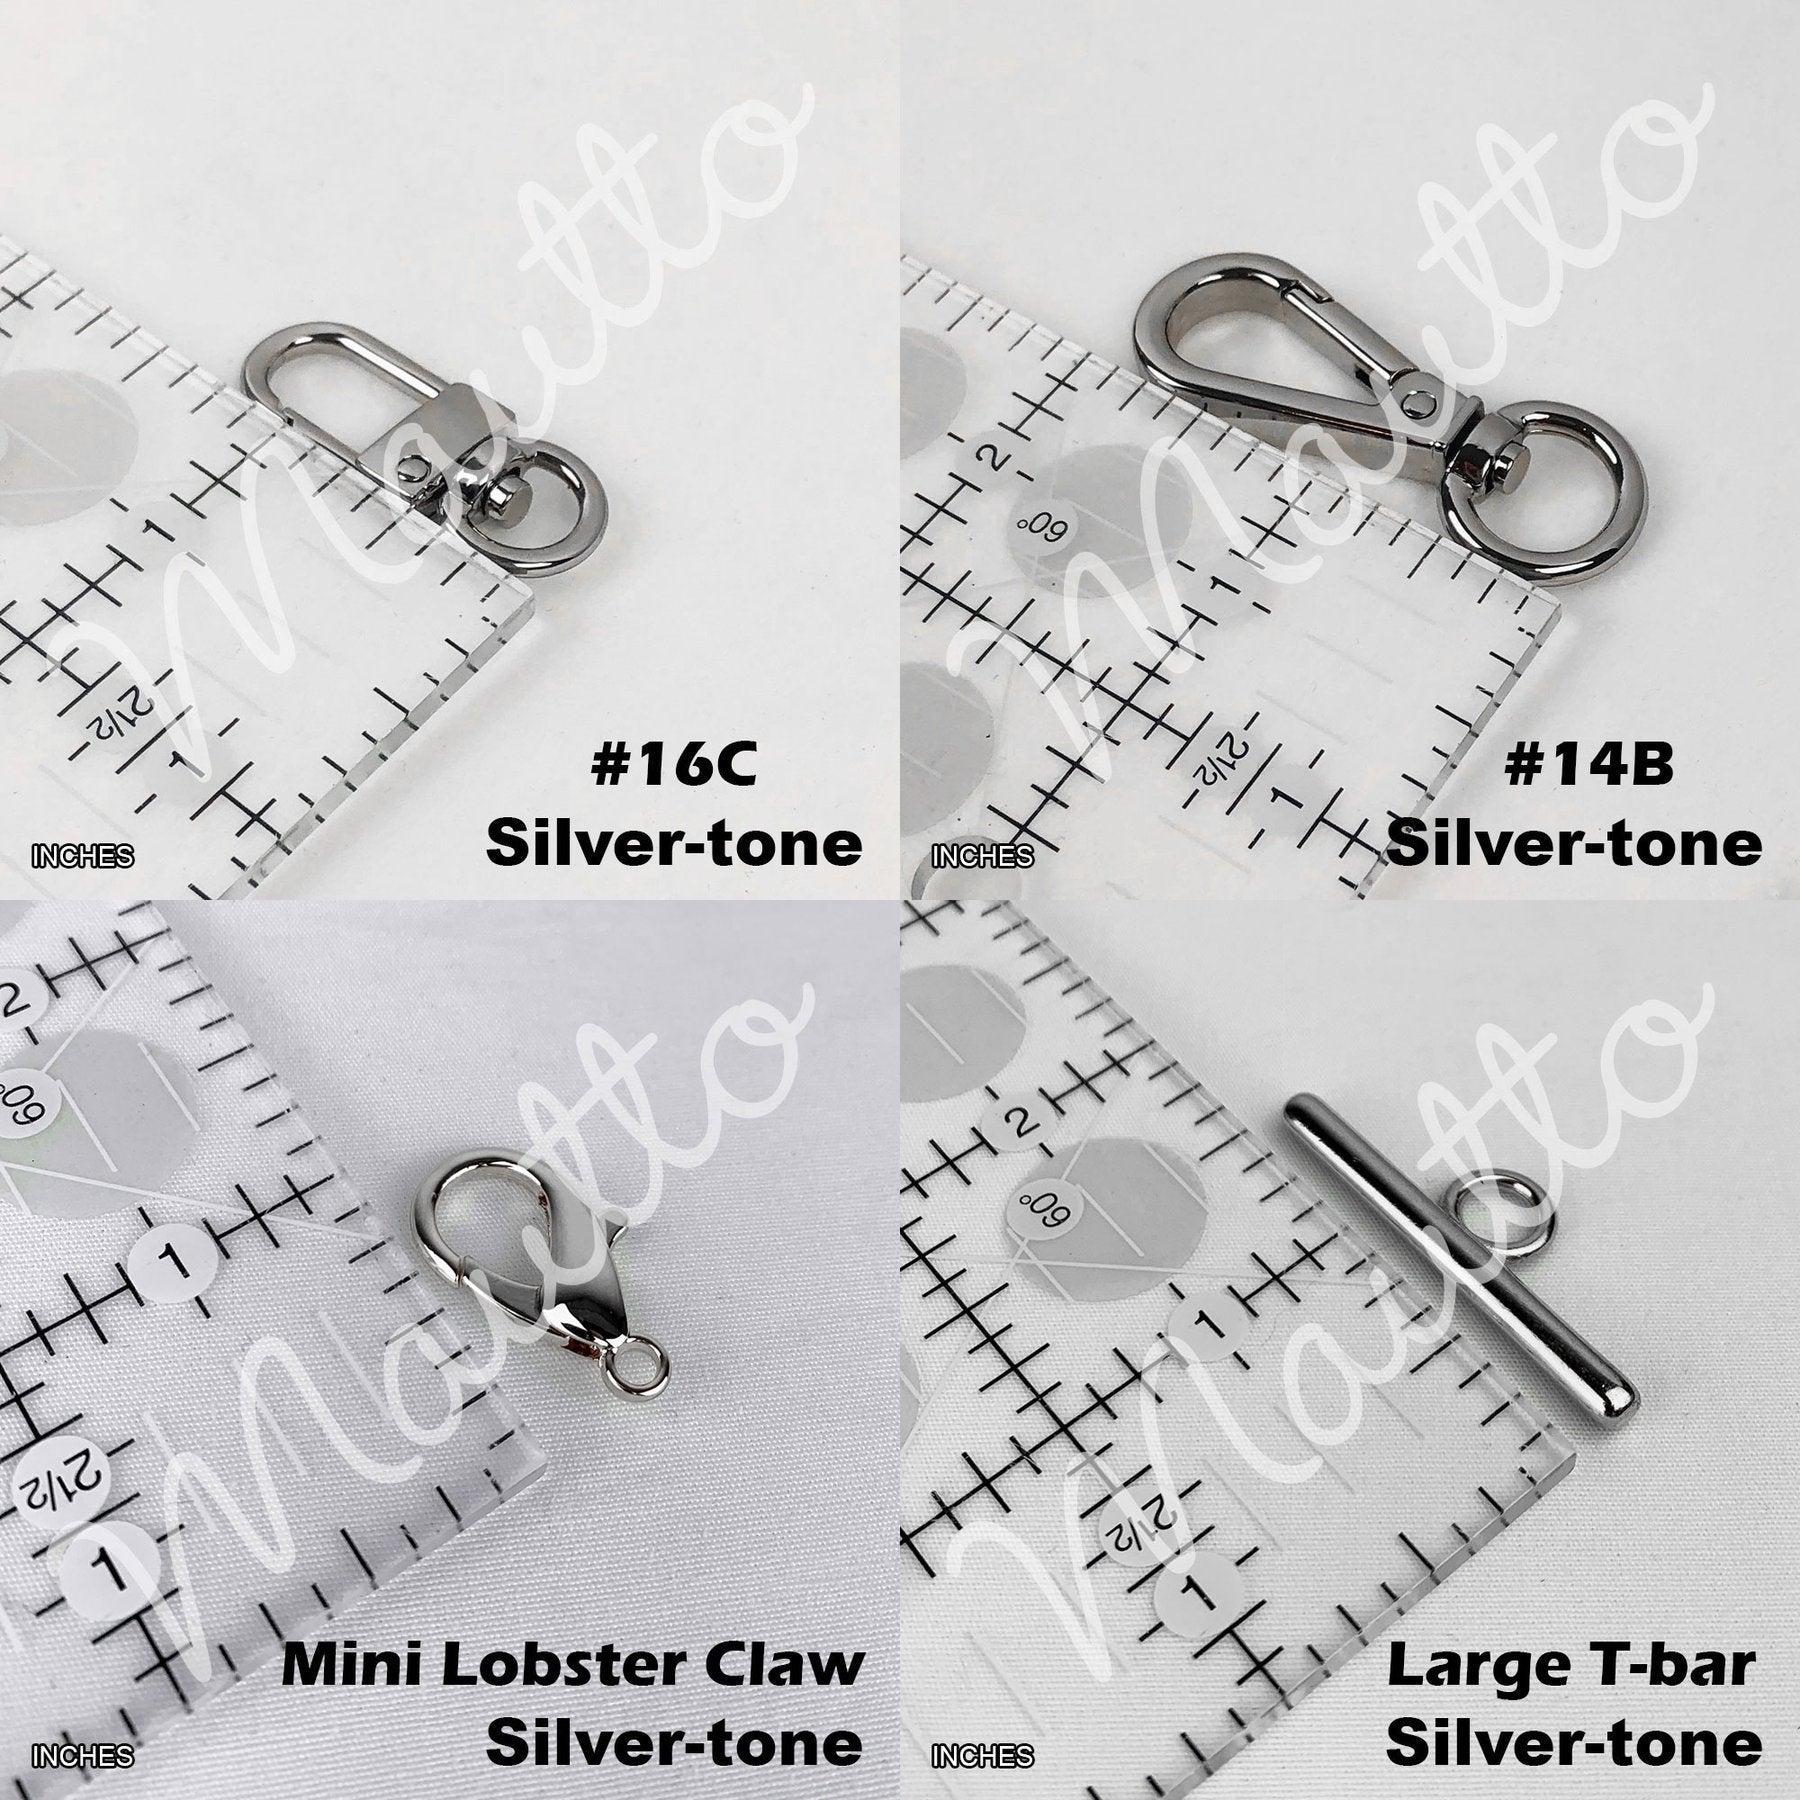 Large Flat Diamond Cut Chain Strap GOLD Chain Luxury Handbag Strap 9/16  15mm Wide Choose Length & Hooks/clasps 